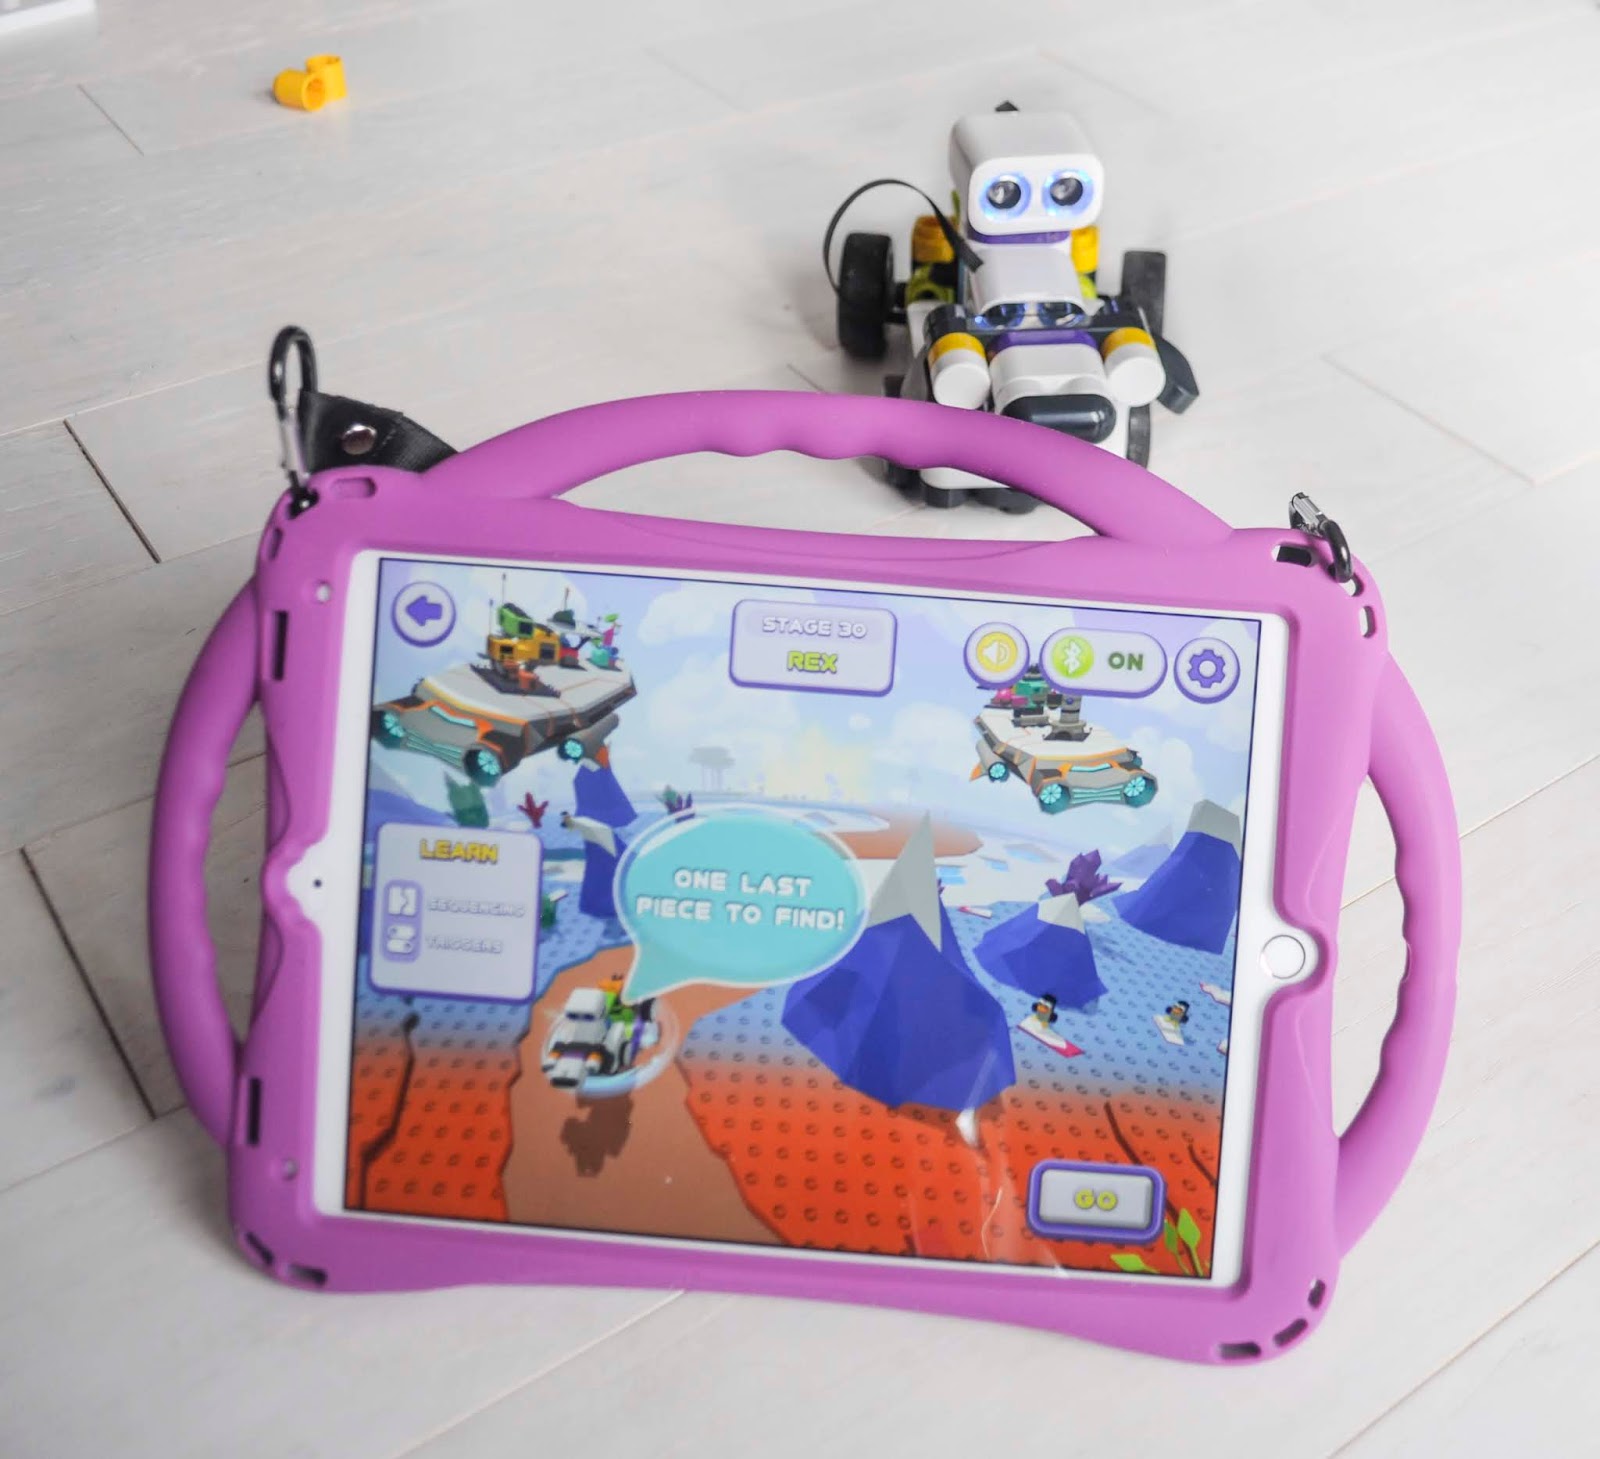 Botzees Mini Coding Robots Education Pack